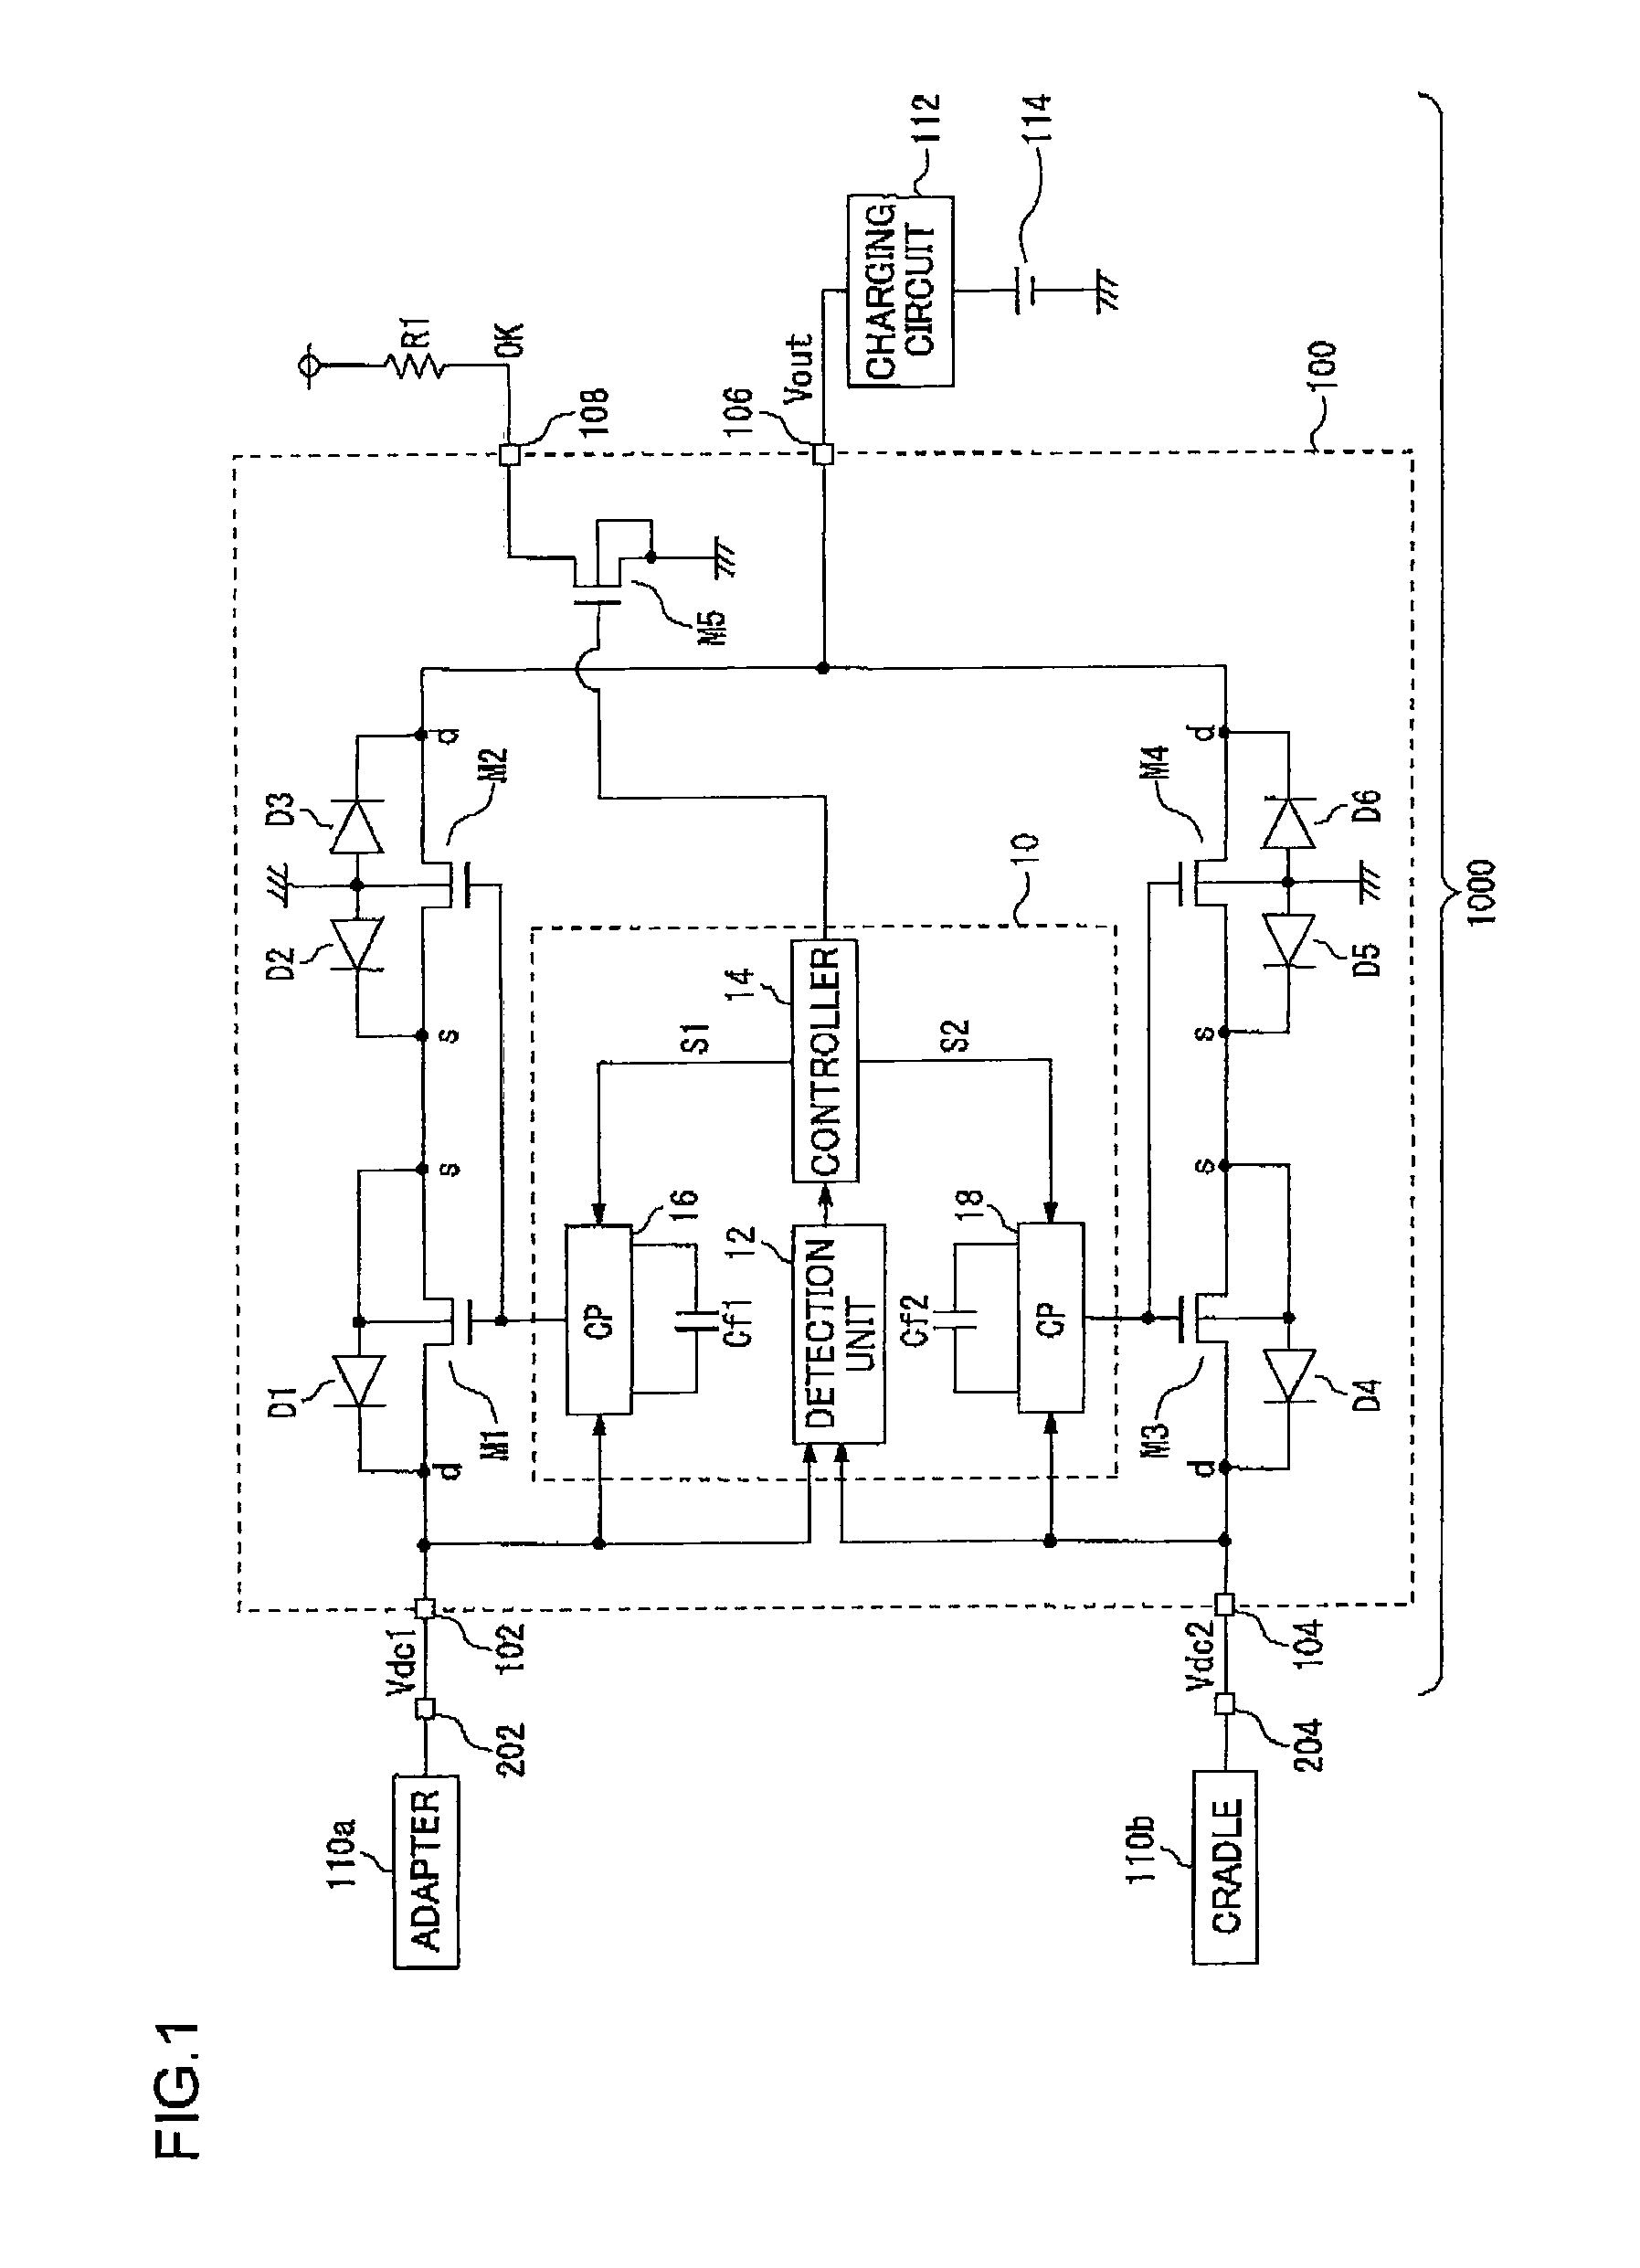 Selector circuit